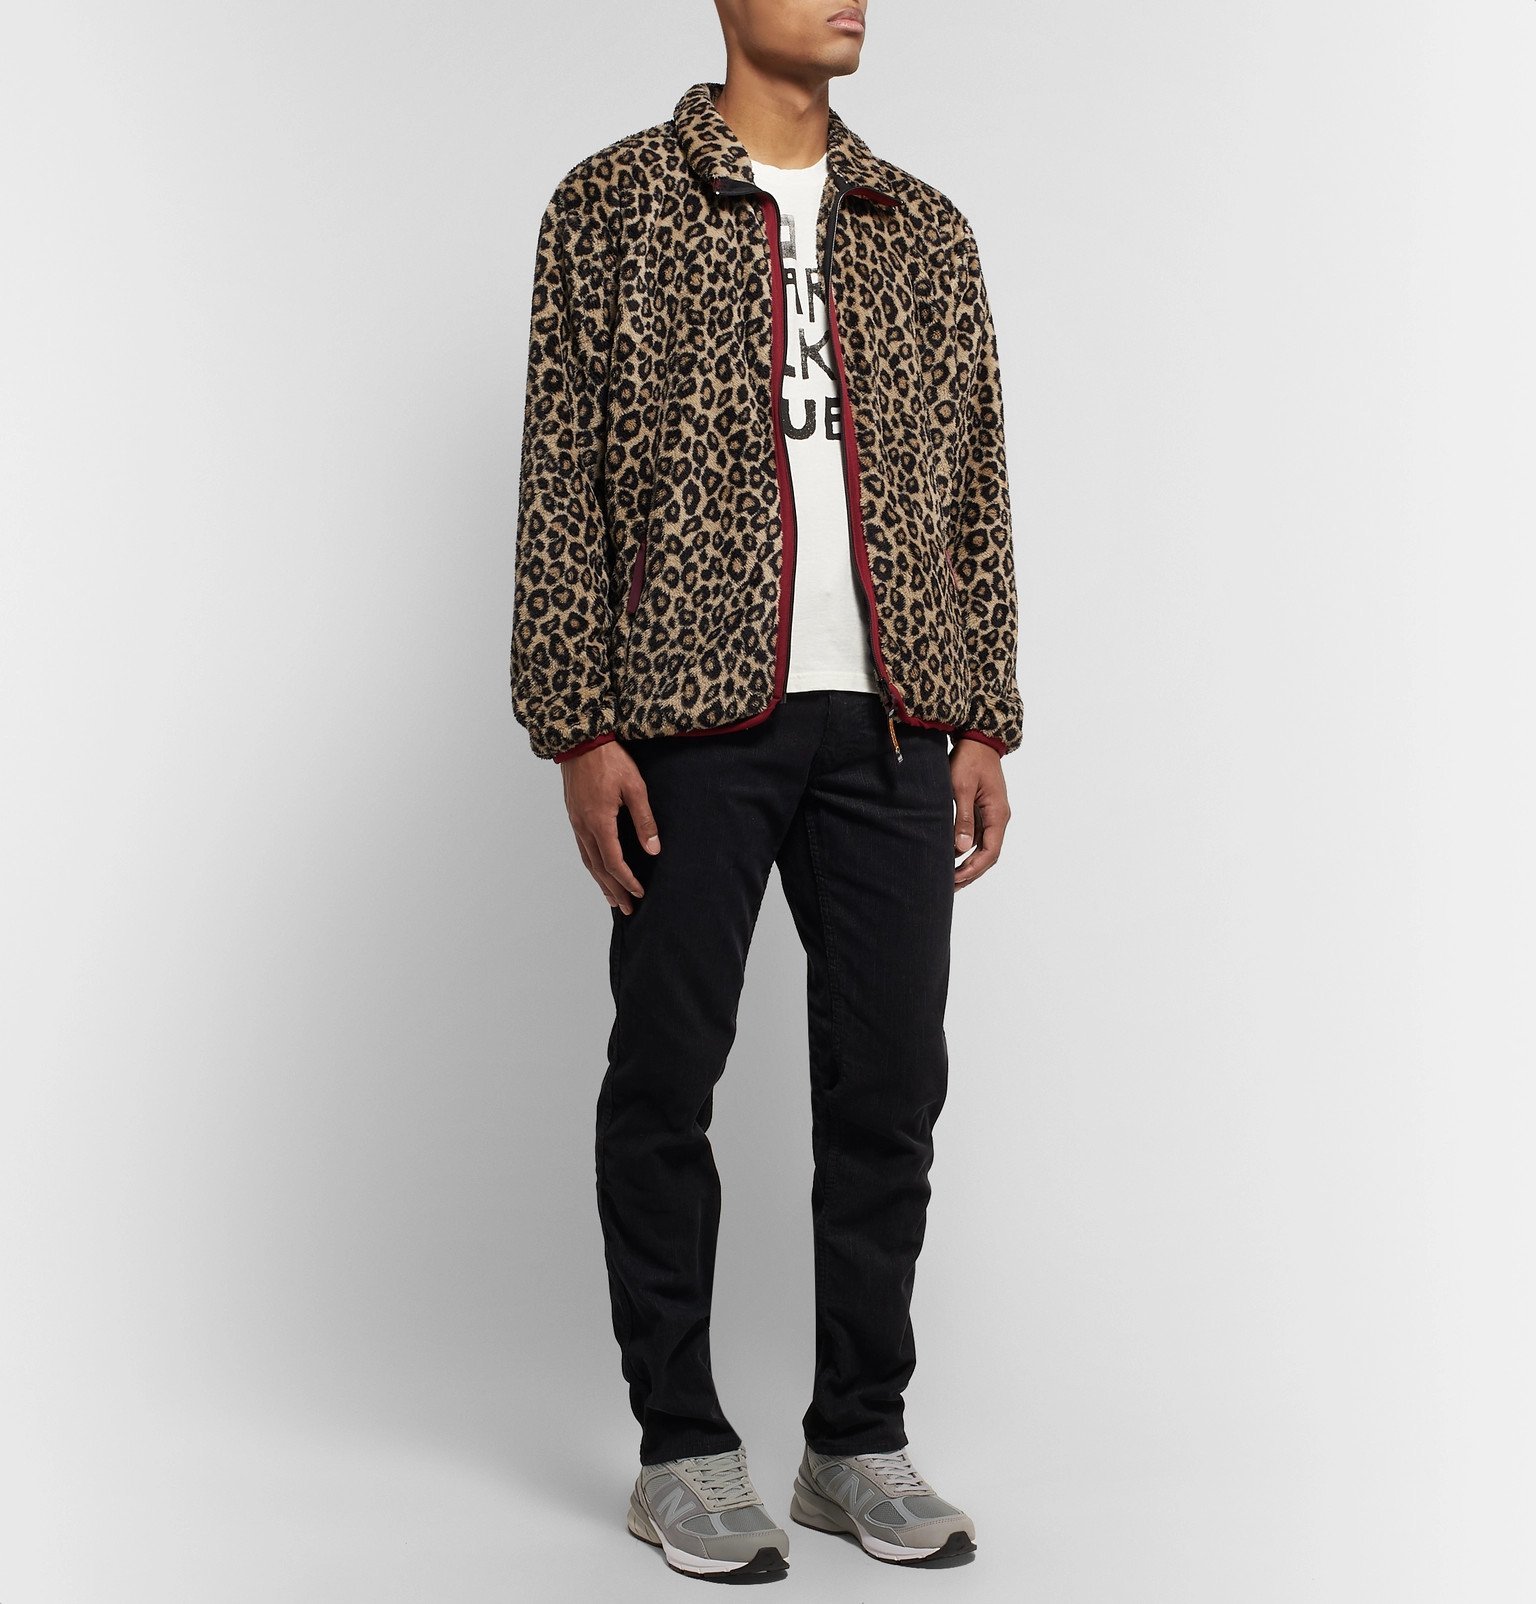 KAPITAL - Leopard-Print Fleece Jacket - Animal print KAPITAL